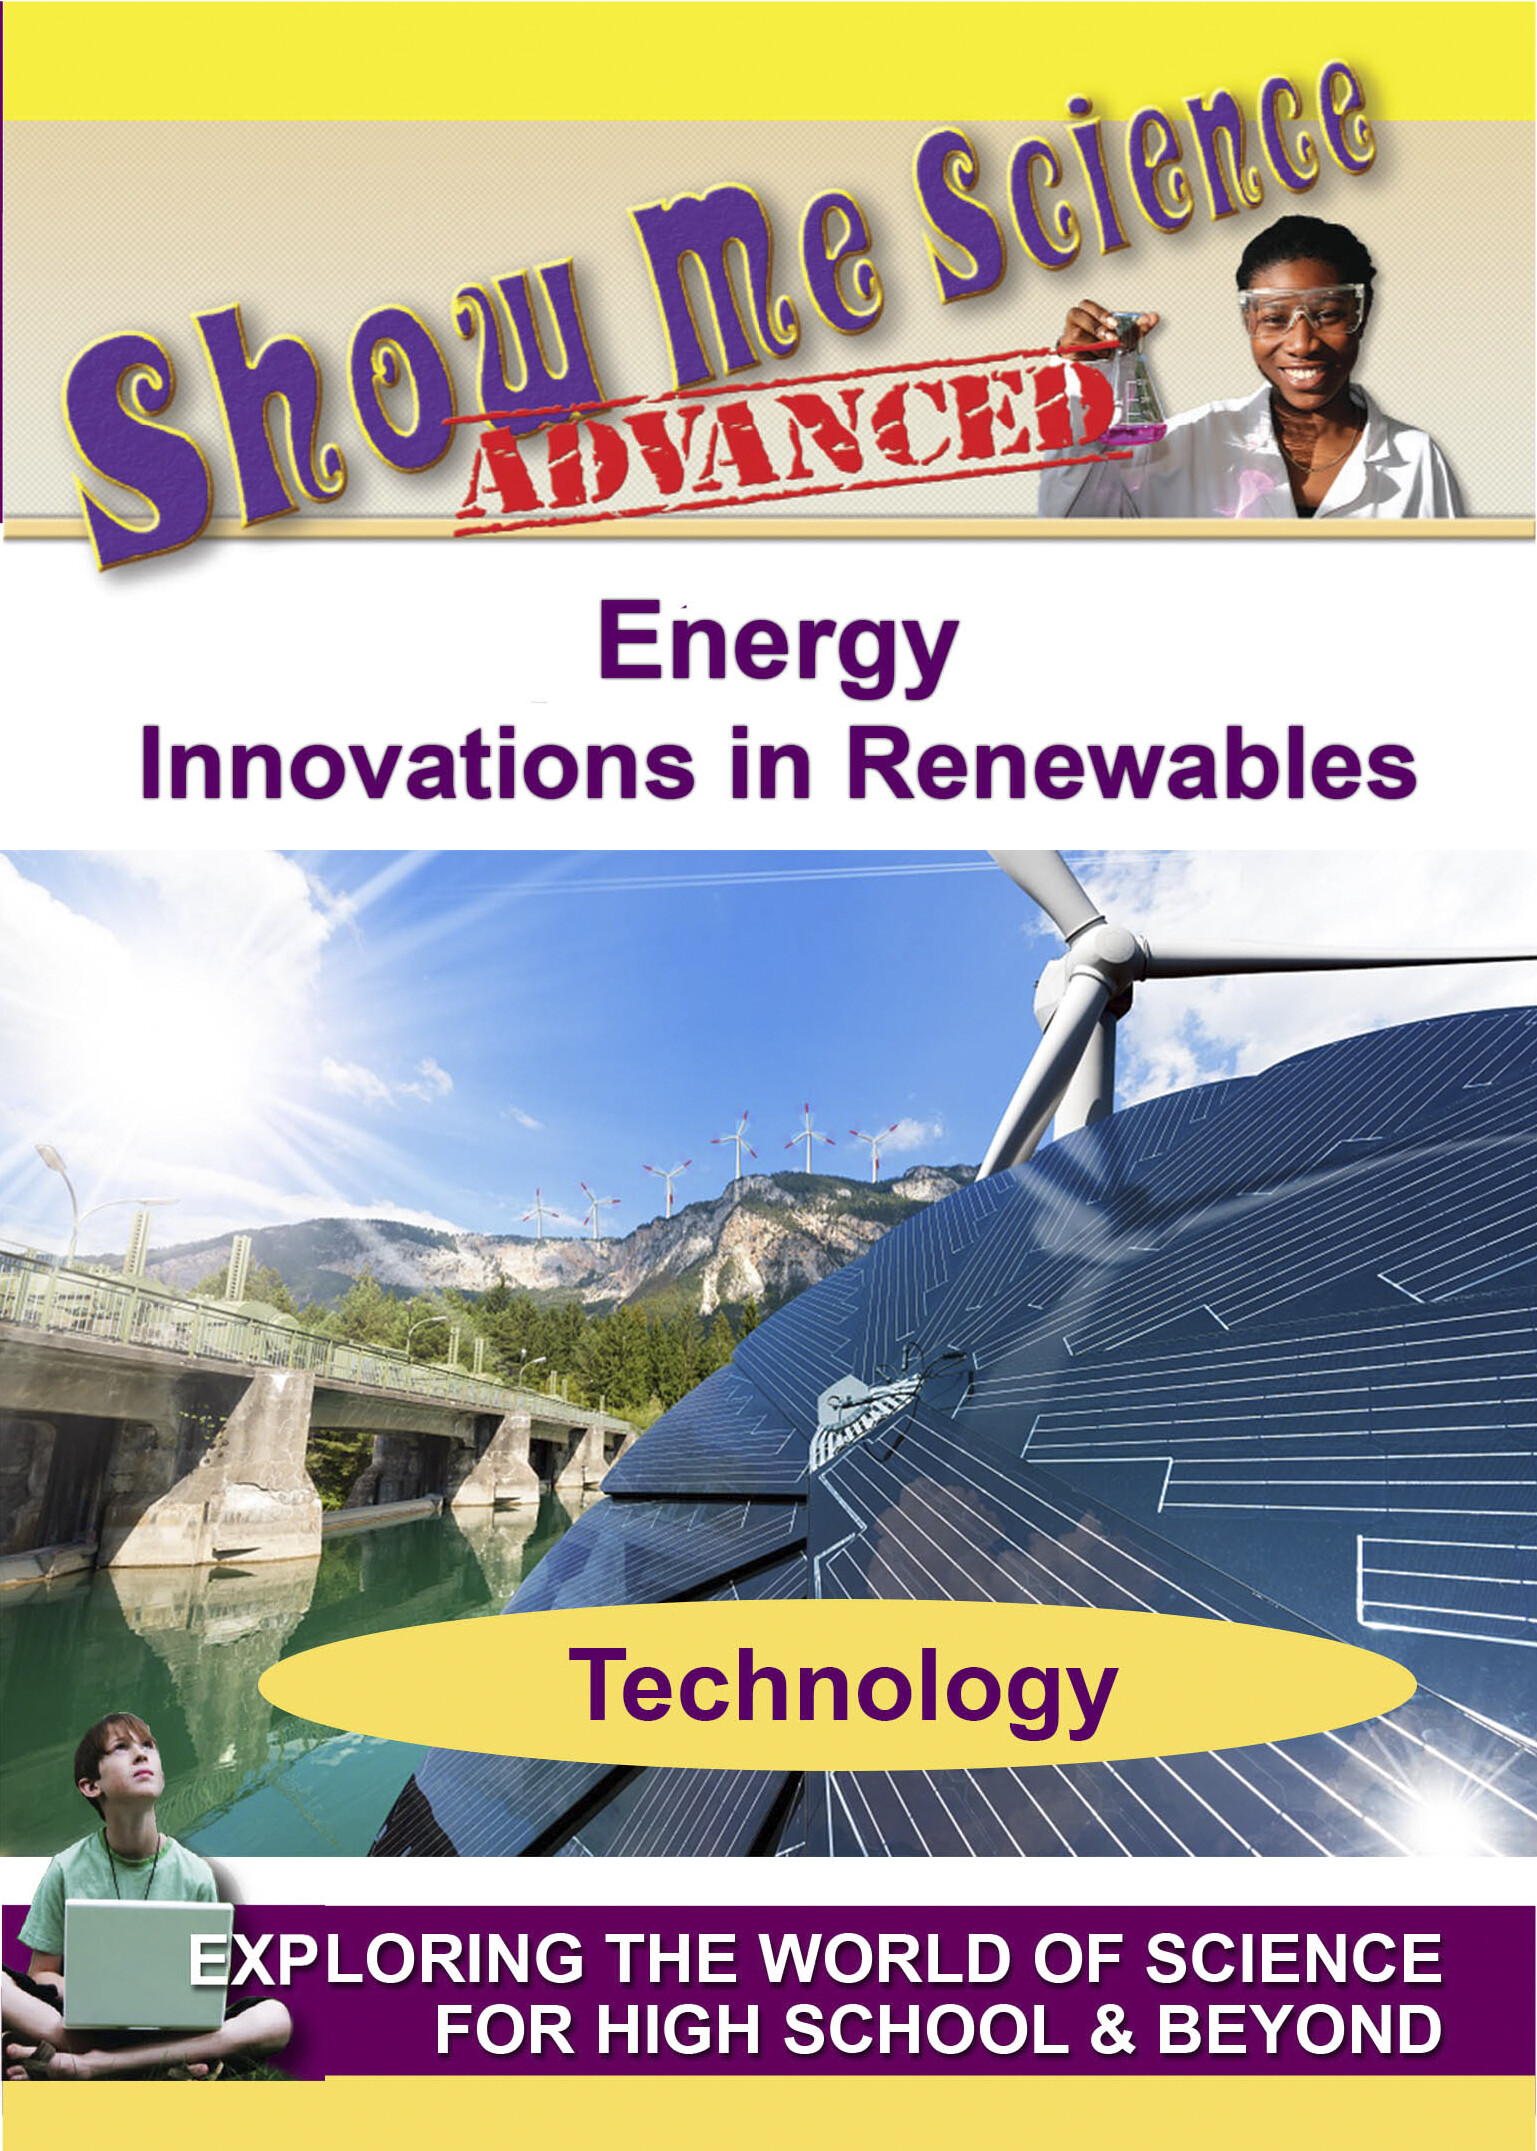 K4686 - Energy Innovations in Renewables